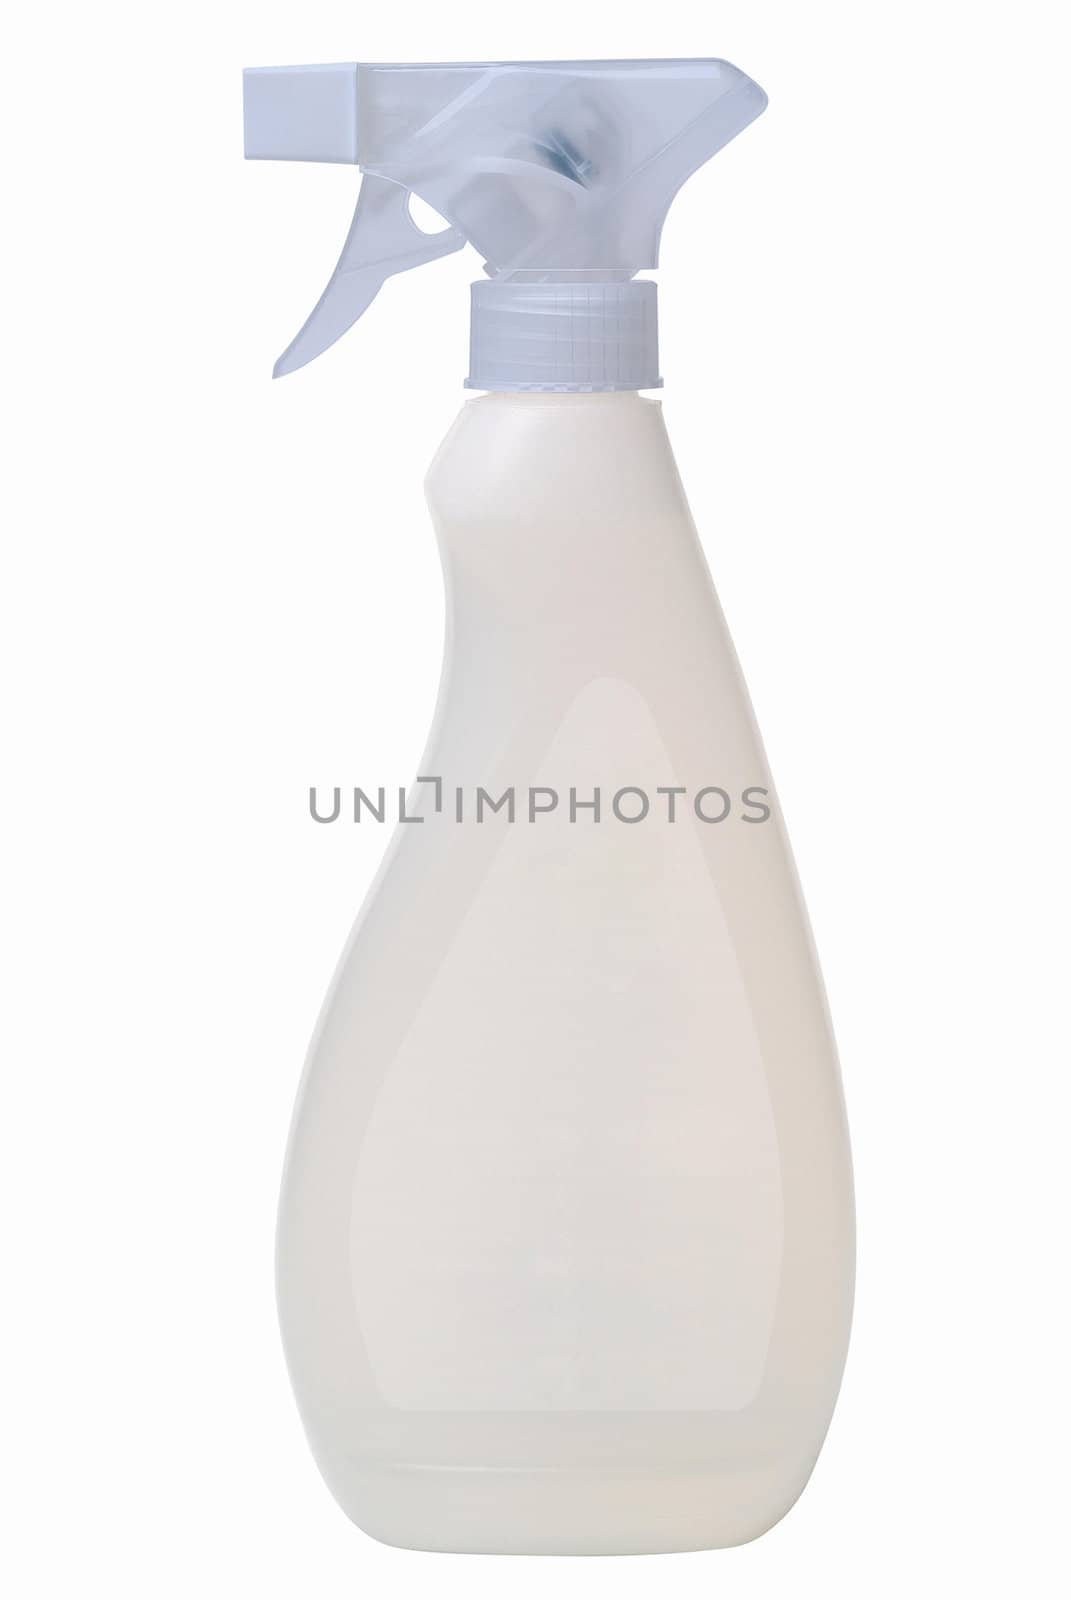 White plastic spray bottle on isolated background